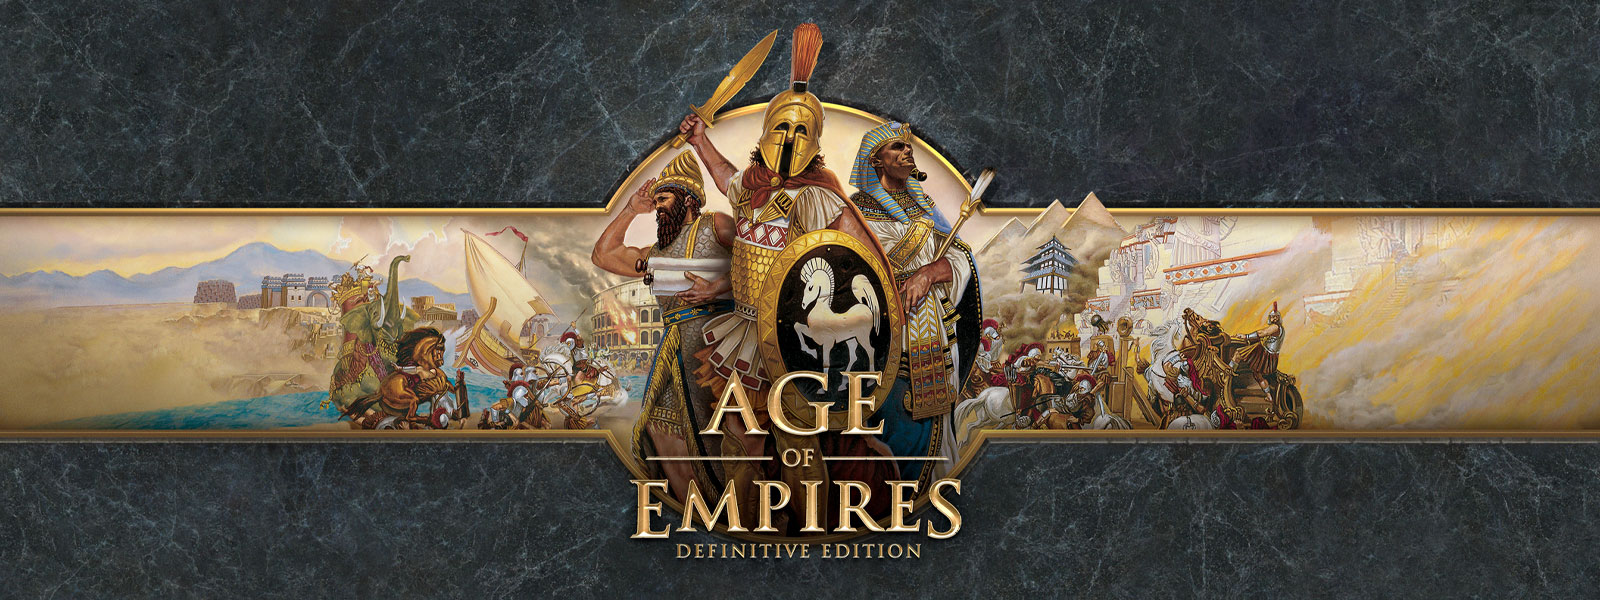 Age of Empires: Definitive Edition 標誌在以戰爭領袖及其軍隊為特點的灰色板岩背景上